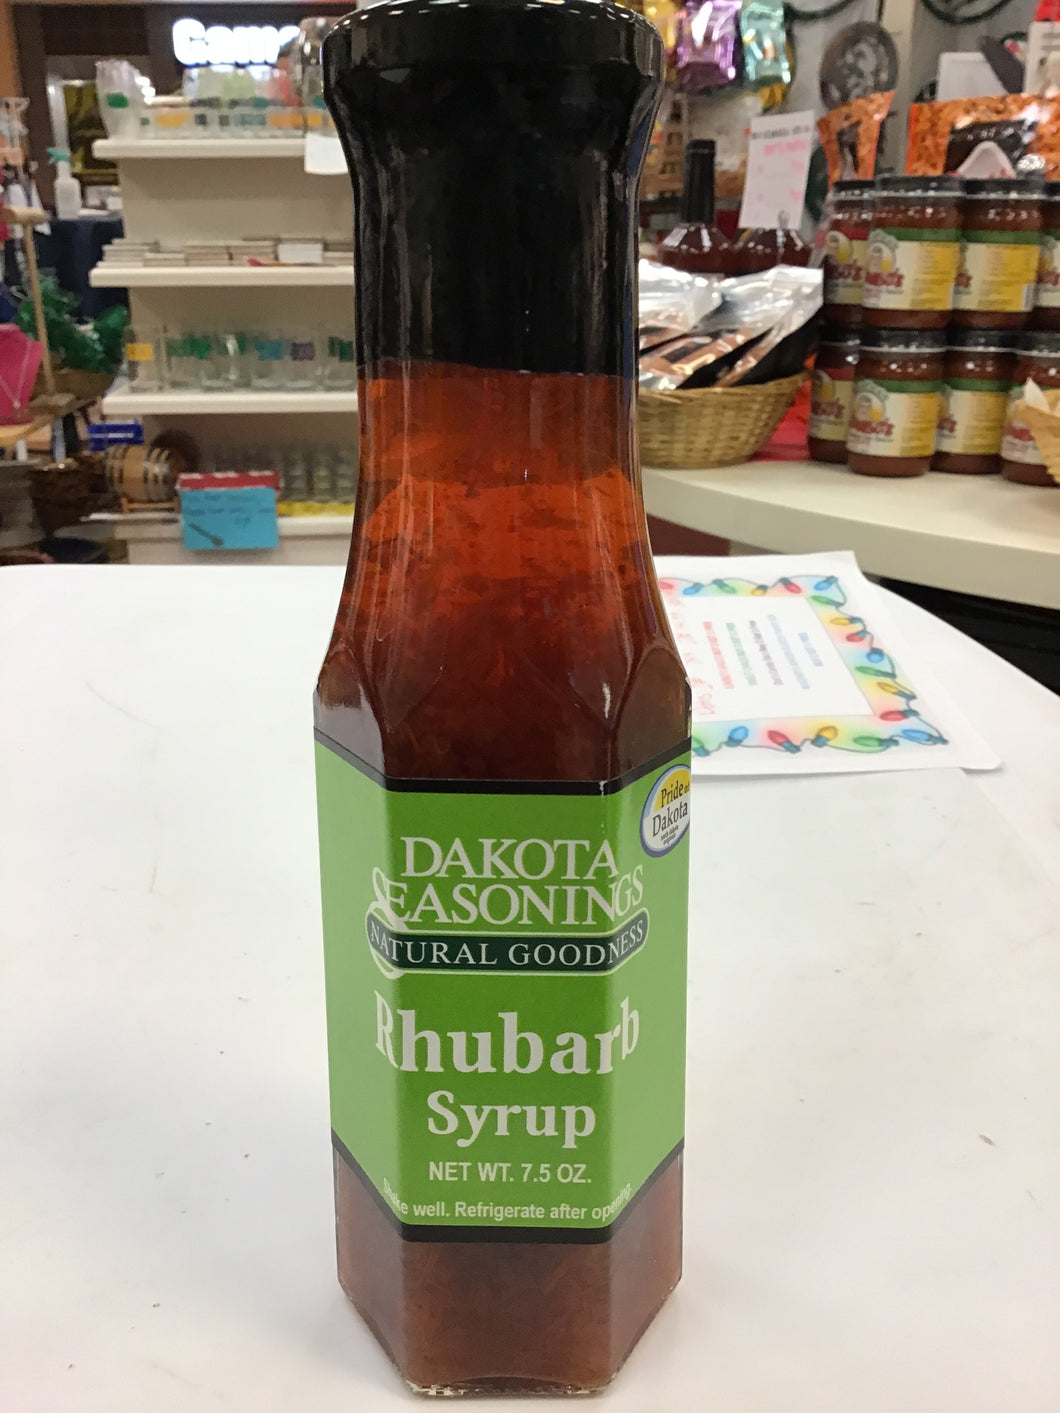 Dakota Seasonings Rhubarb Syrup 